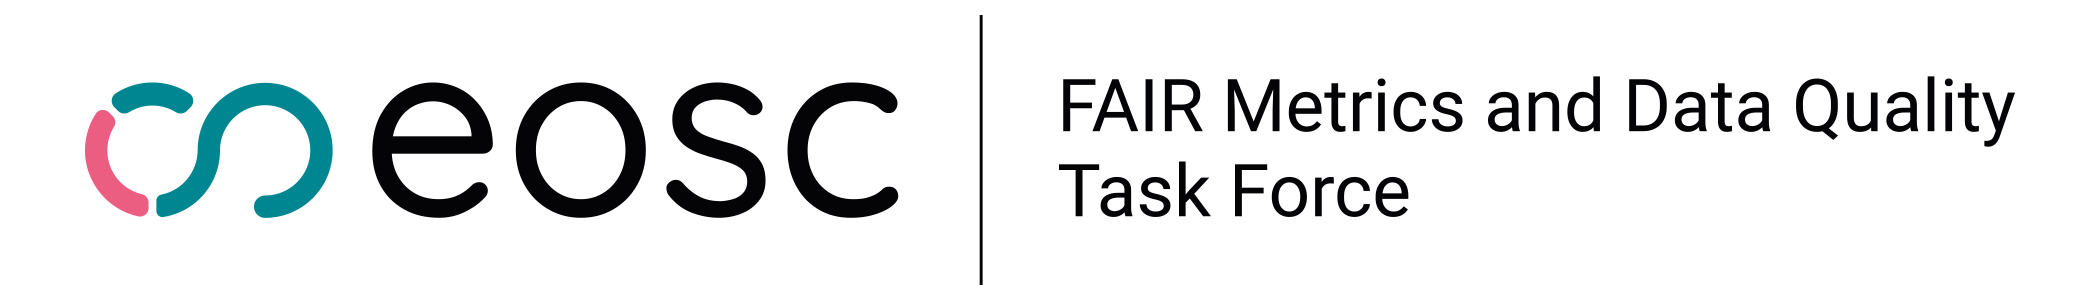 Report on FAIR Evaluation community survey